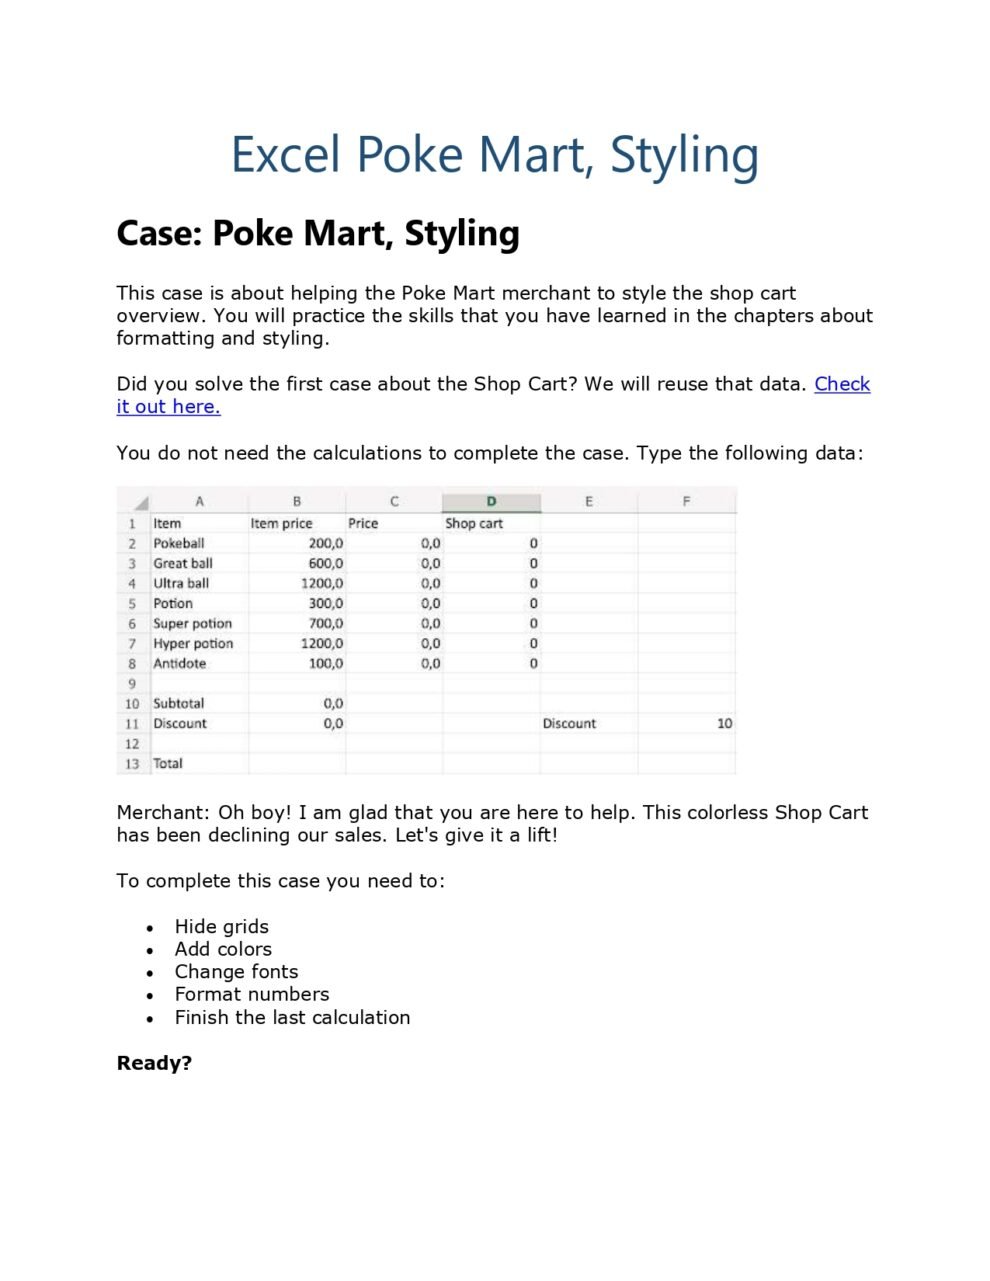 Excel Poke Mart, Styling: A Pdf Guide